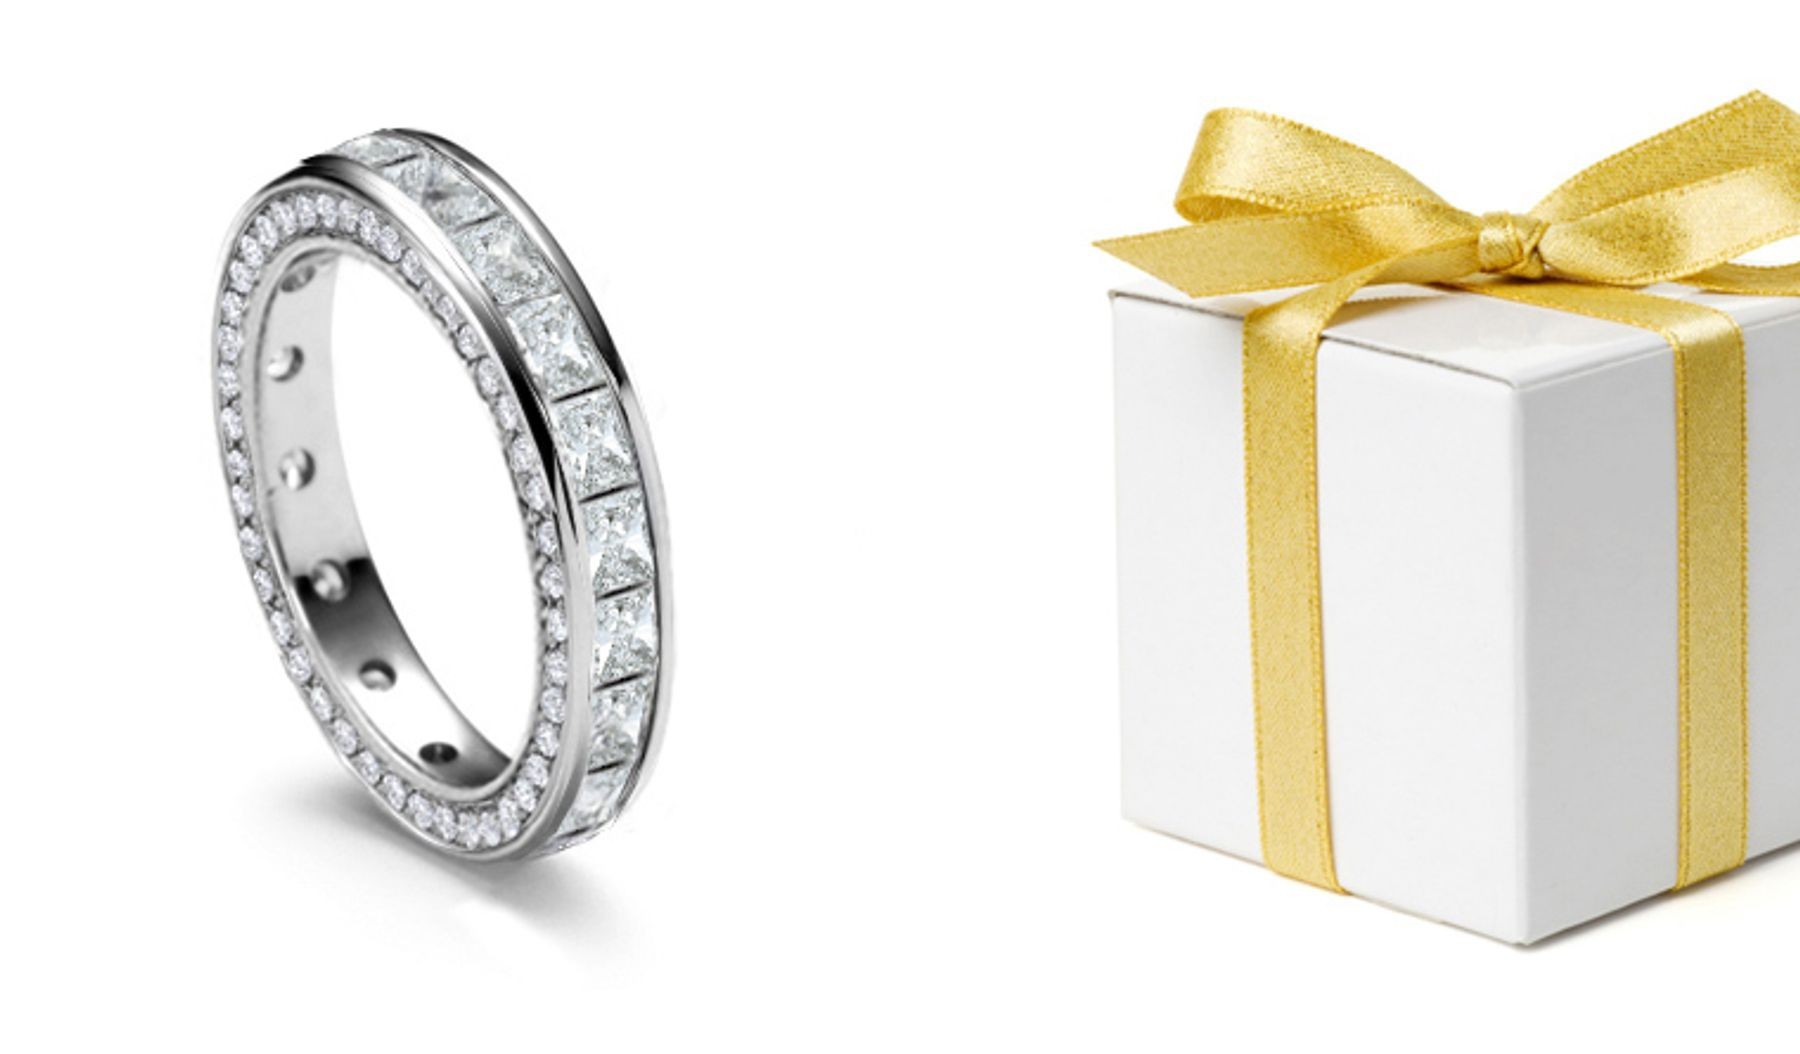 Pure Simple True Love: Vintage Style Princess Cut Diamond Wedding Ring, Diamond Sides in Gold